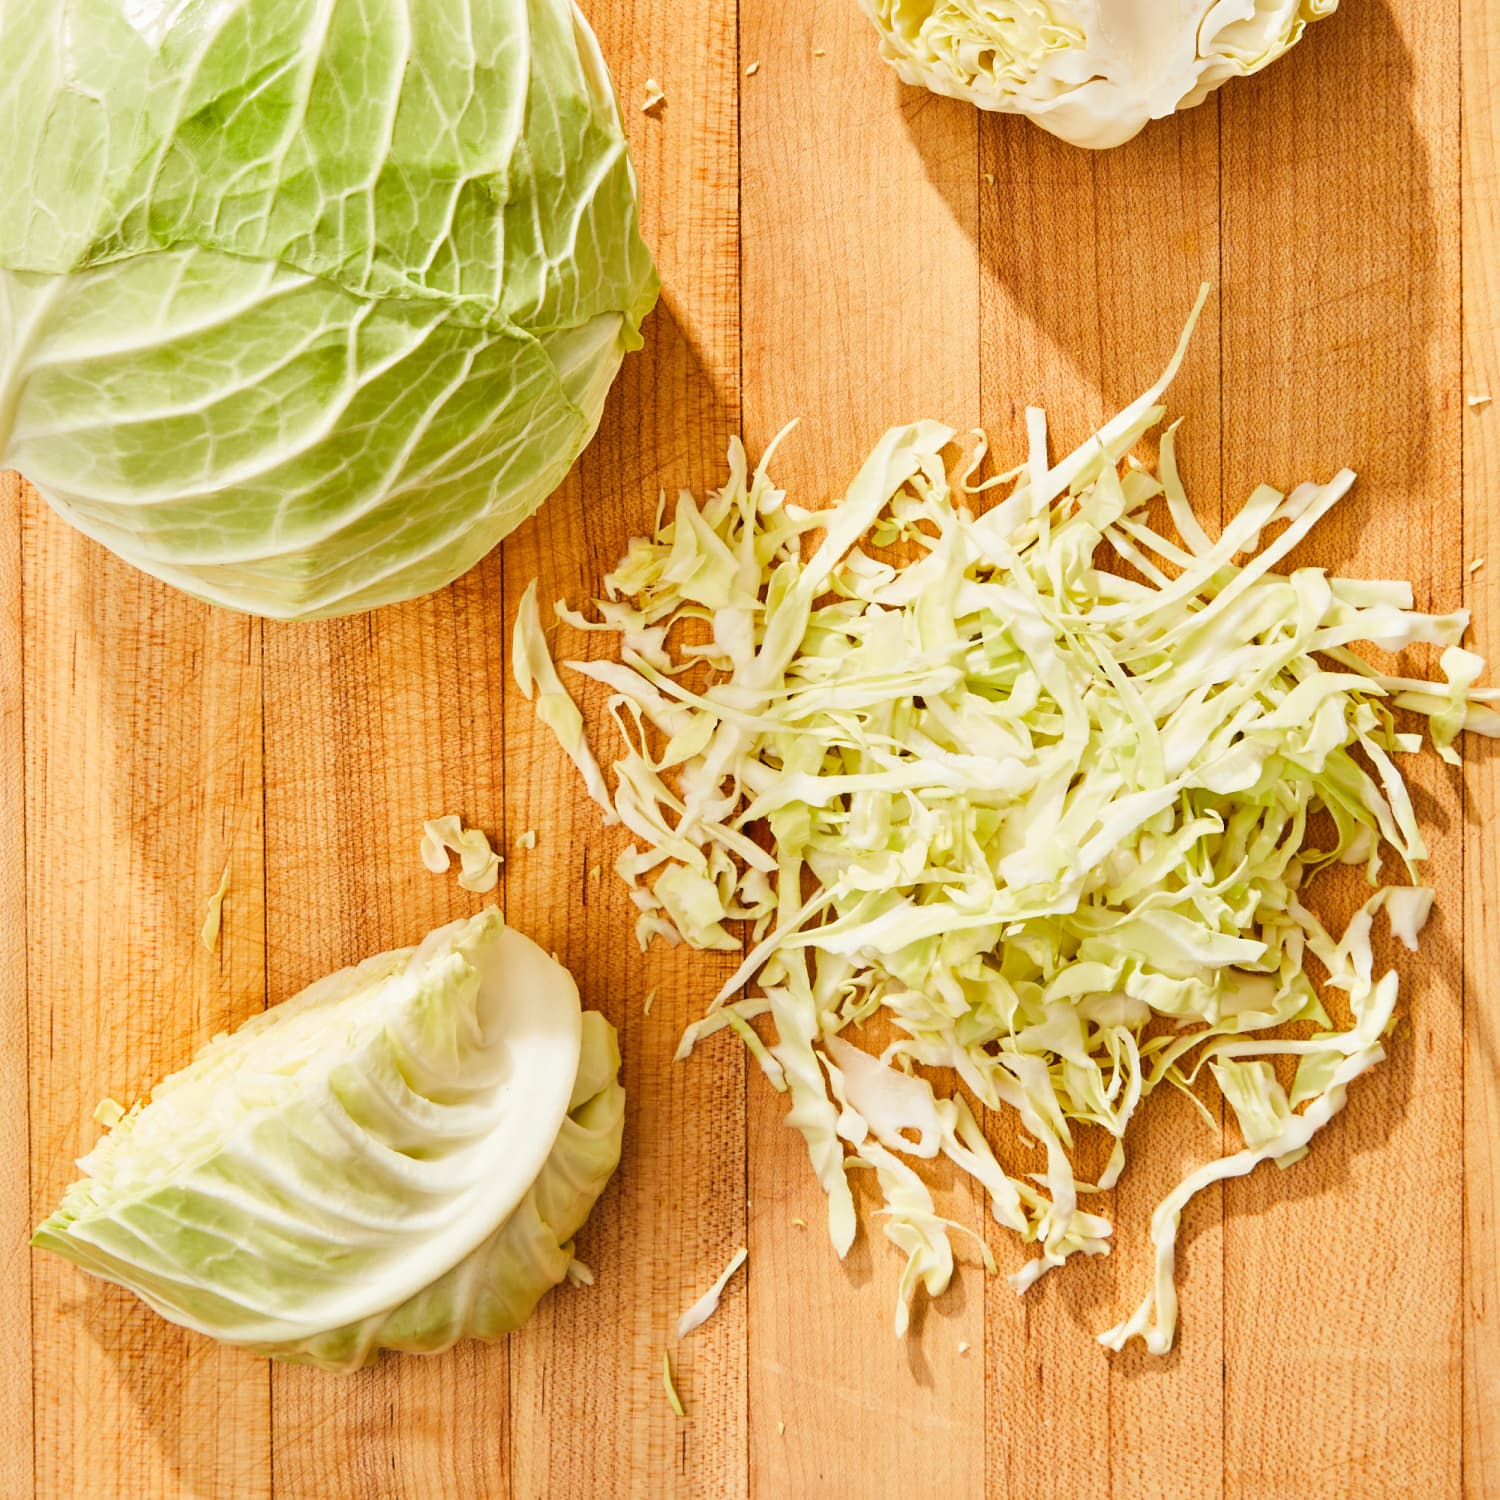 Cabbage - Shredded